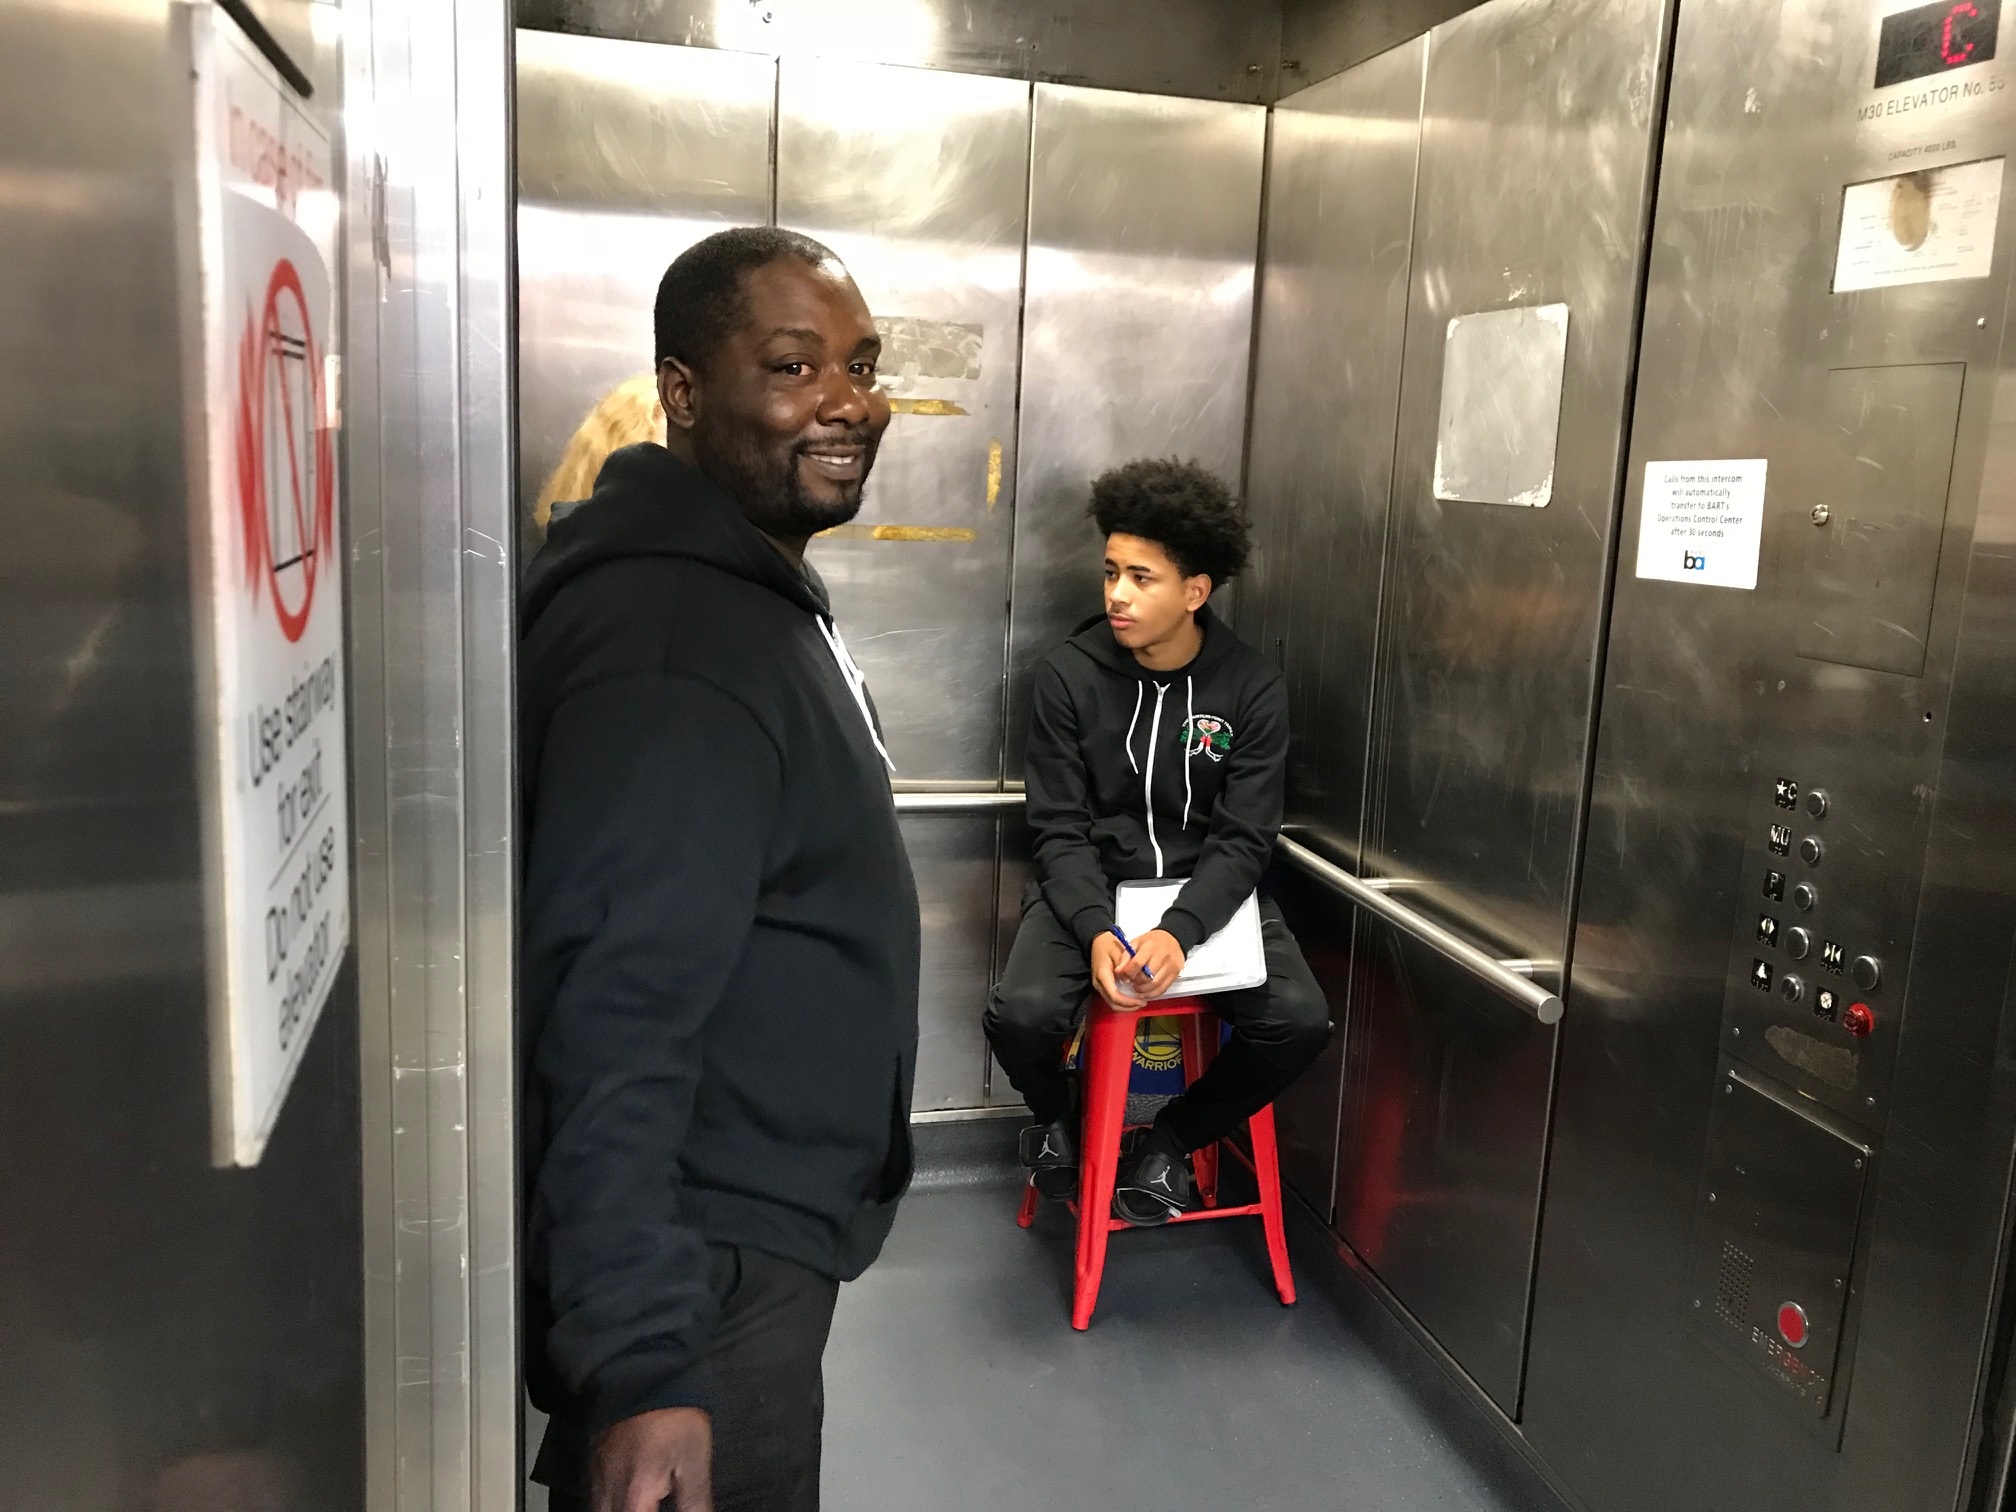 Elevator attendants